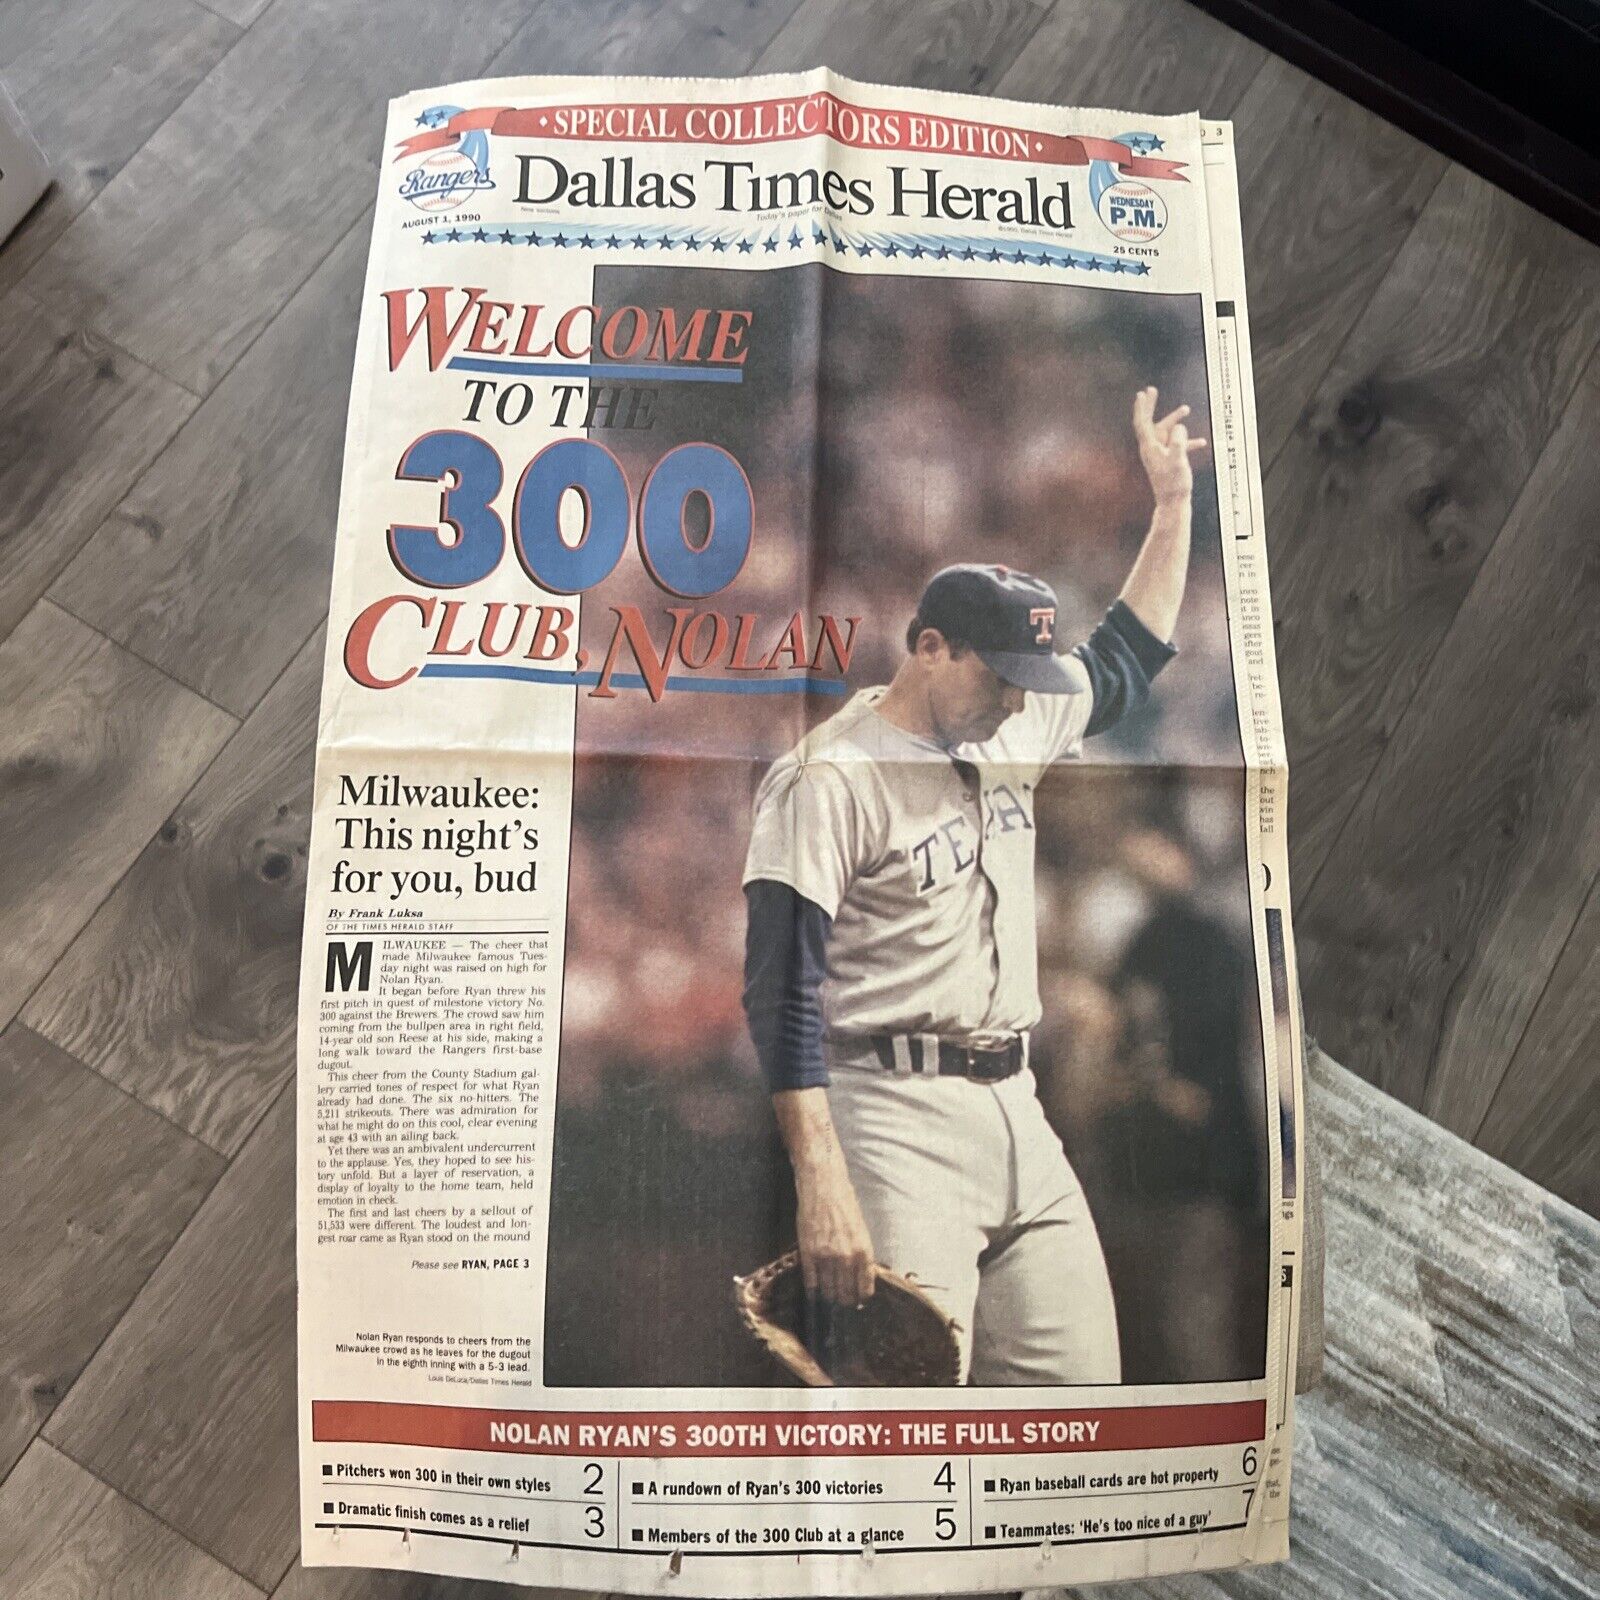 Nolan Ryan “Welcome To The 300 Club” Newspaper. 8-1-1990. Dallas Times Herald.